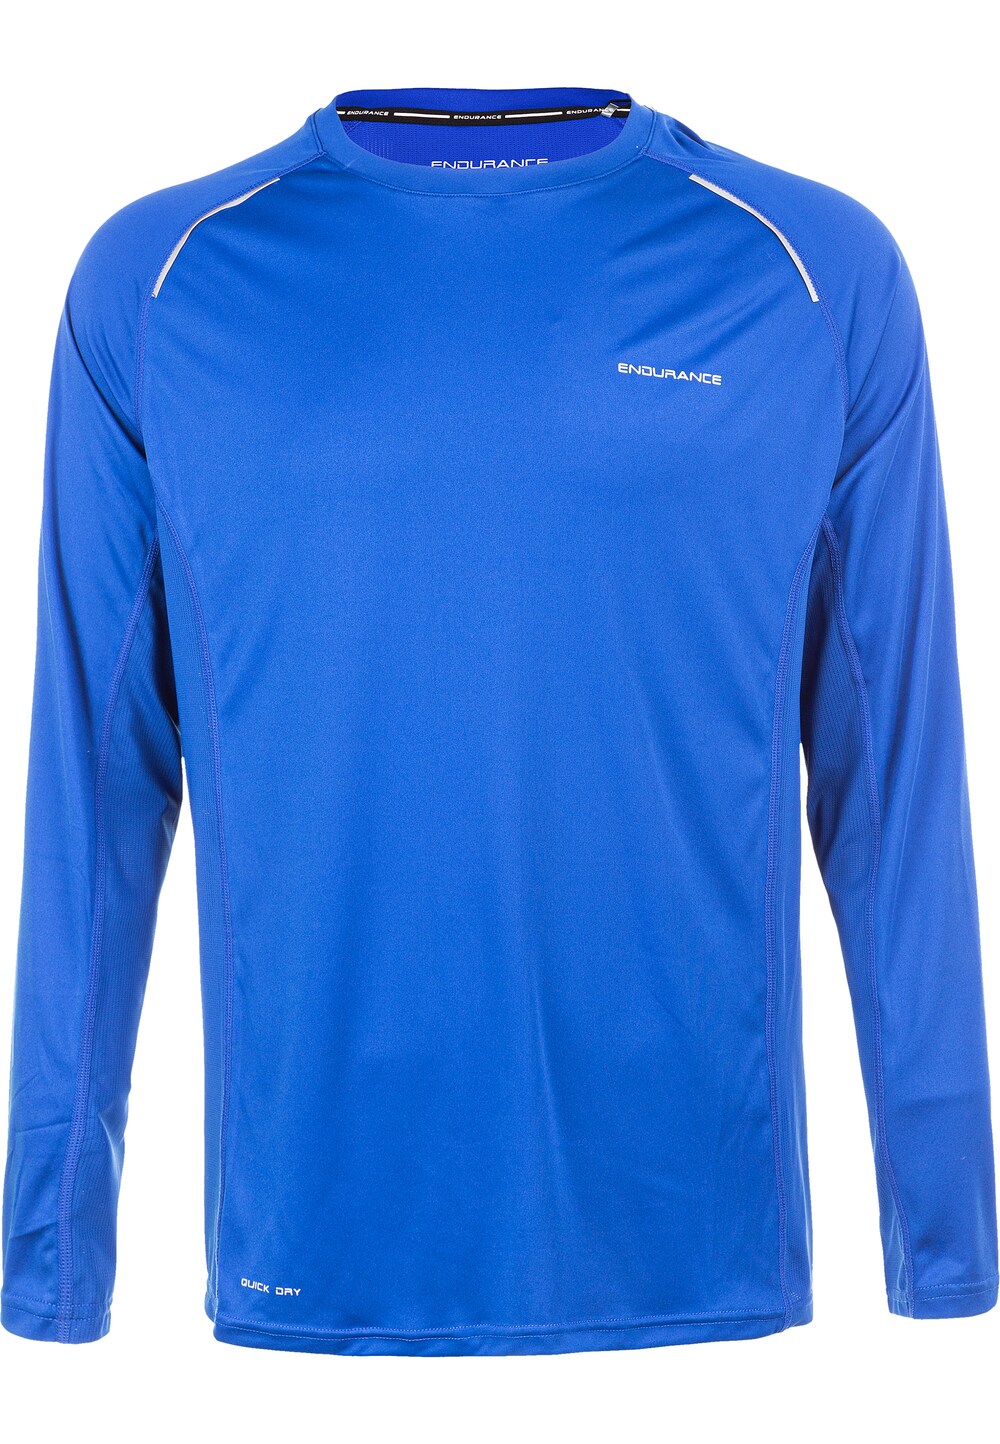 Рубашка для выступлений Endurance Lasse, синий рубашка для выступлений endurance keskon синий